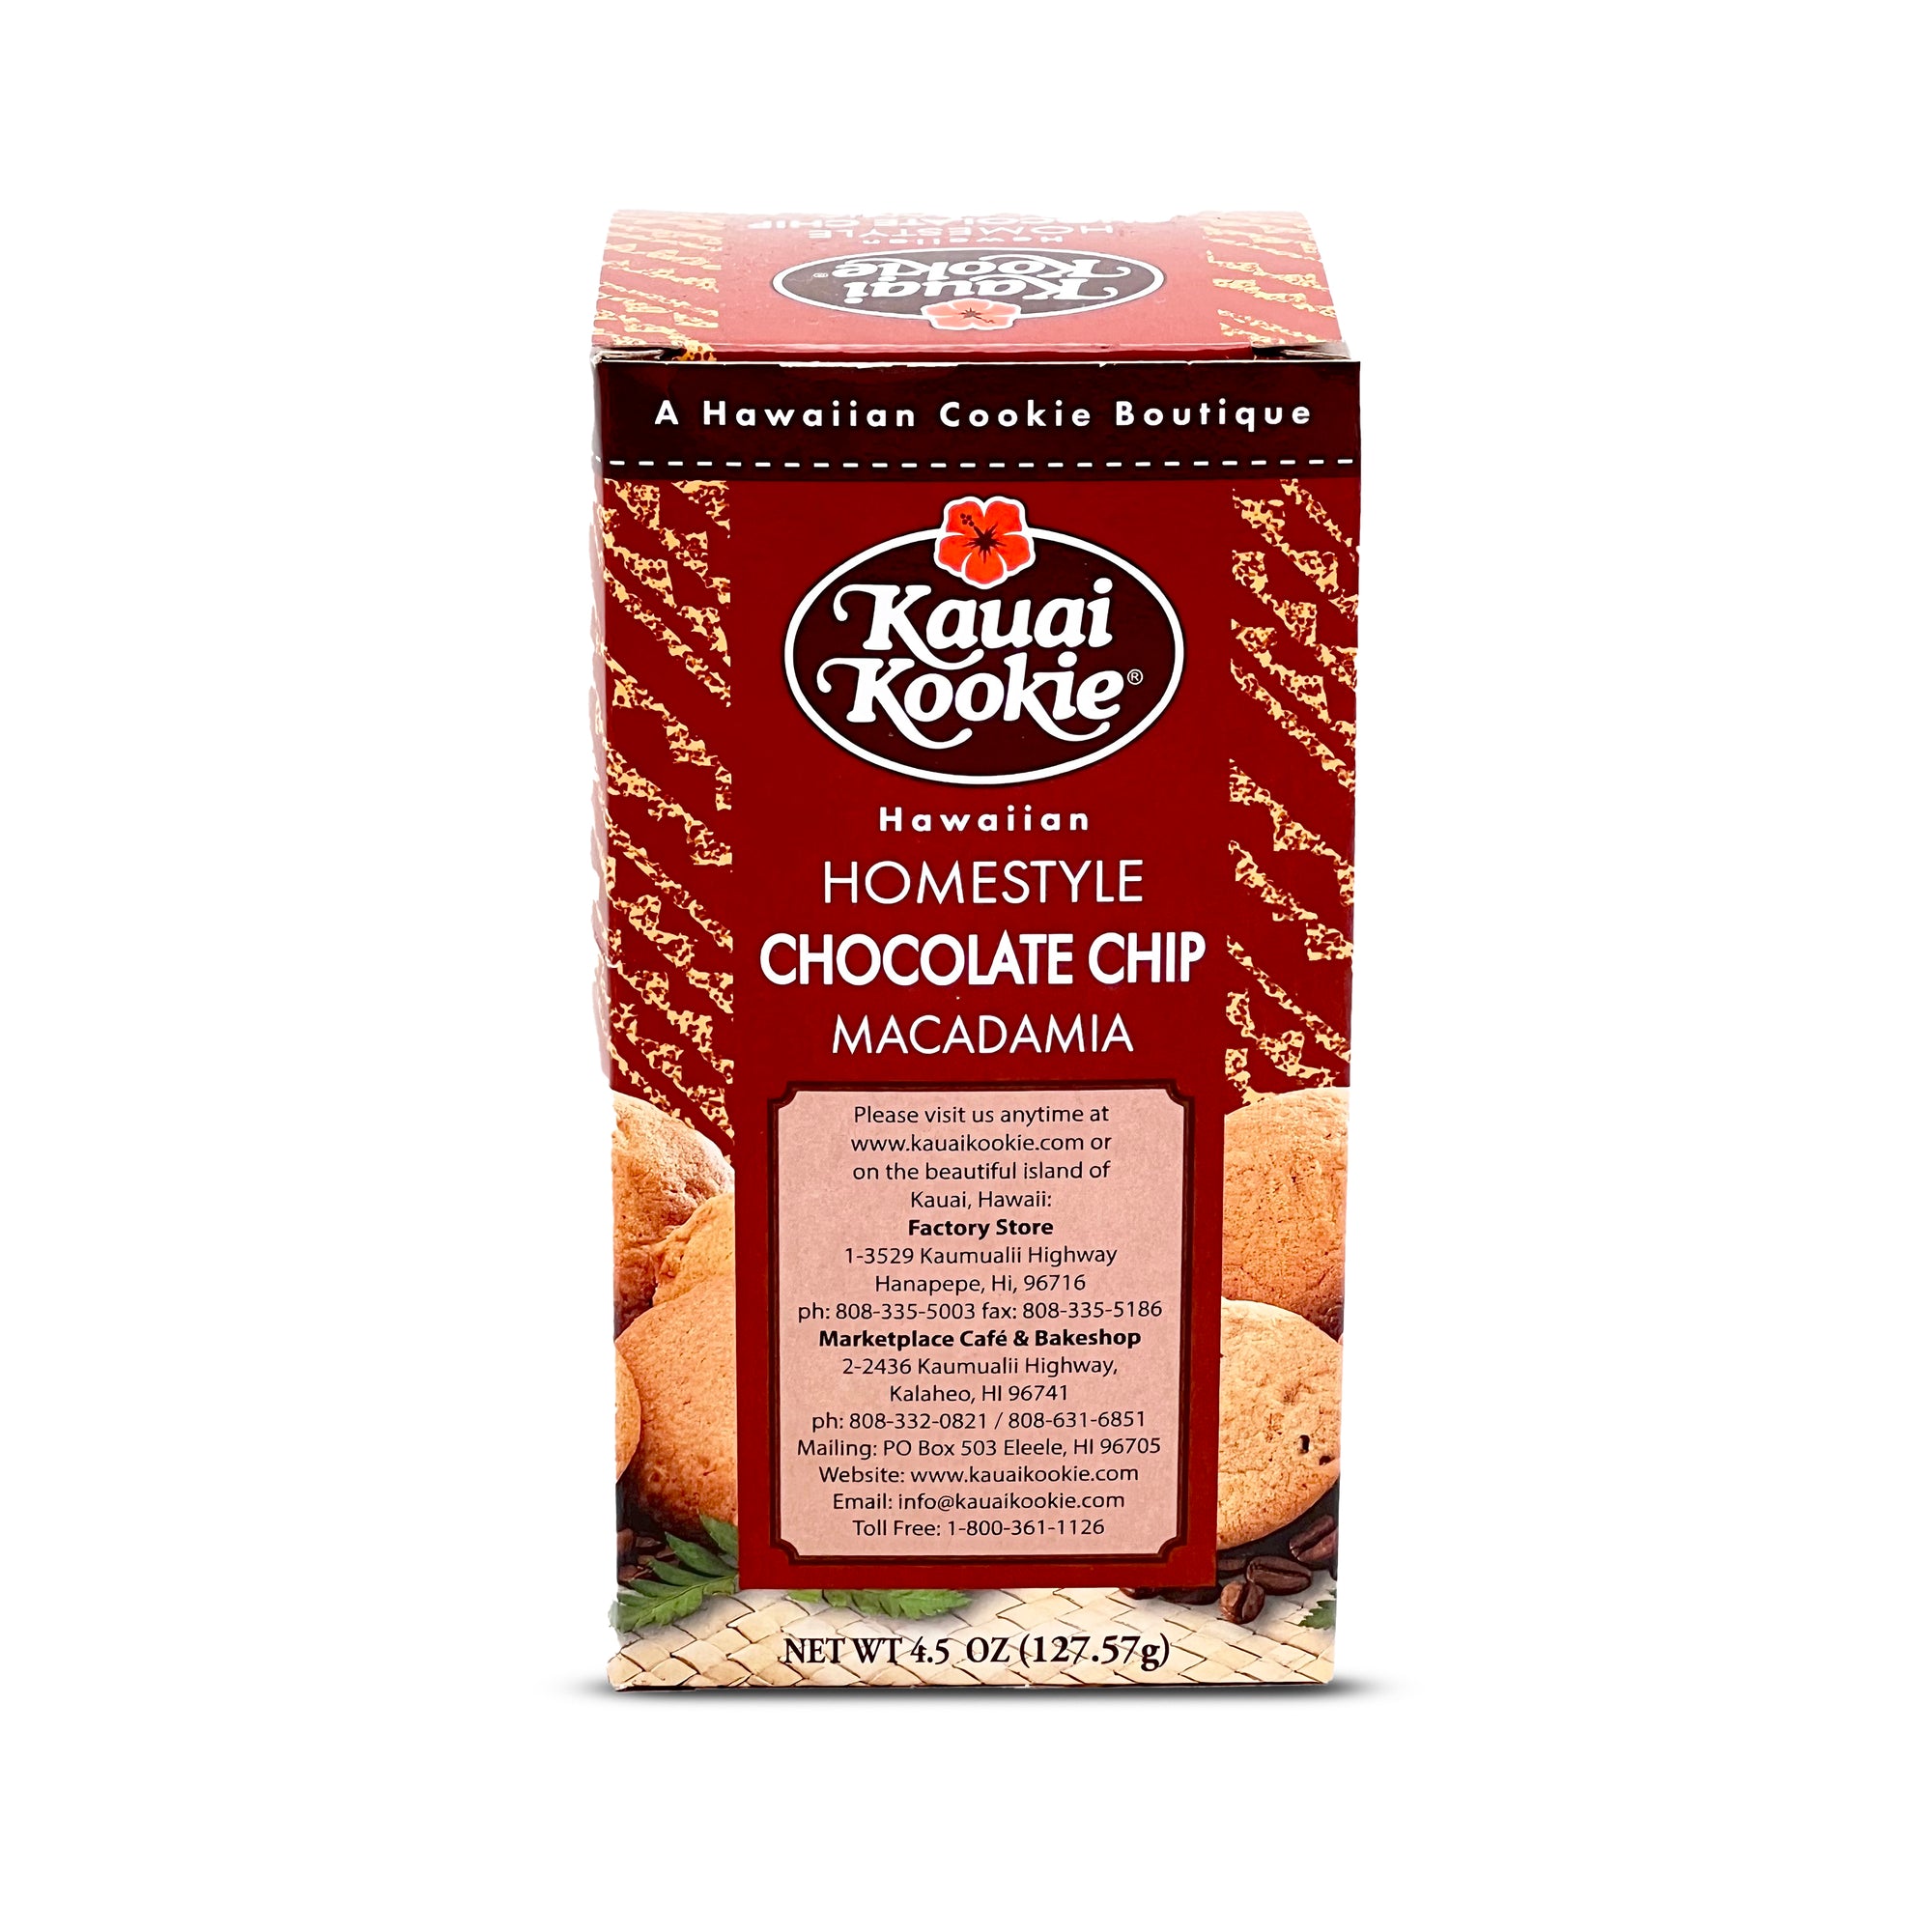 Pop-Up Mākeke - Kauai Kookie - Homestyle Chocolate Chip Macadamia Nut Cookies - Back View